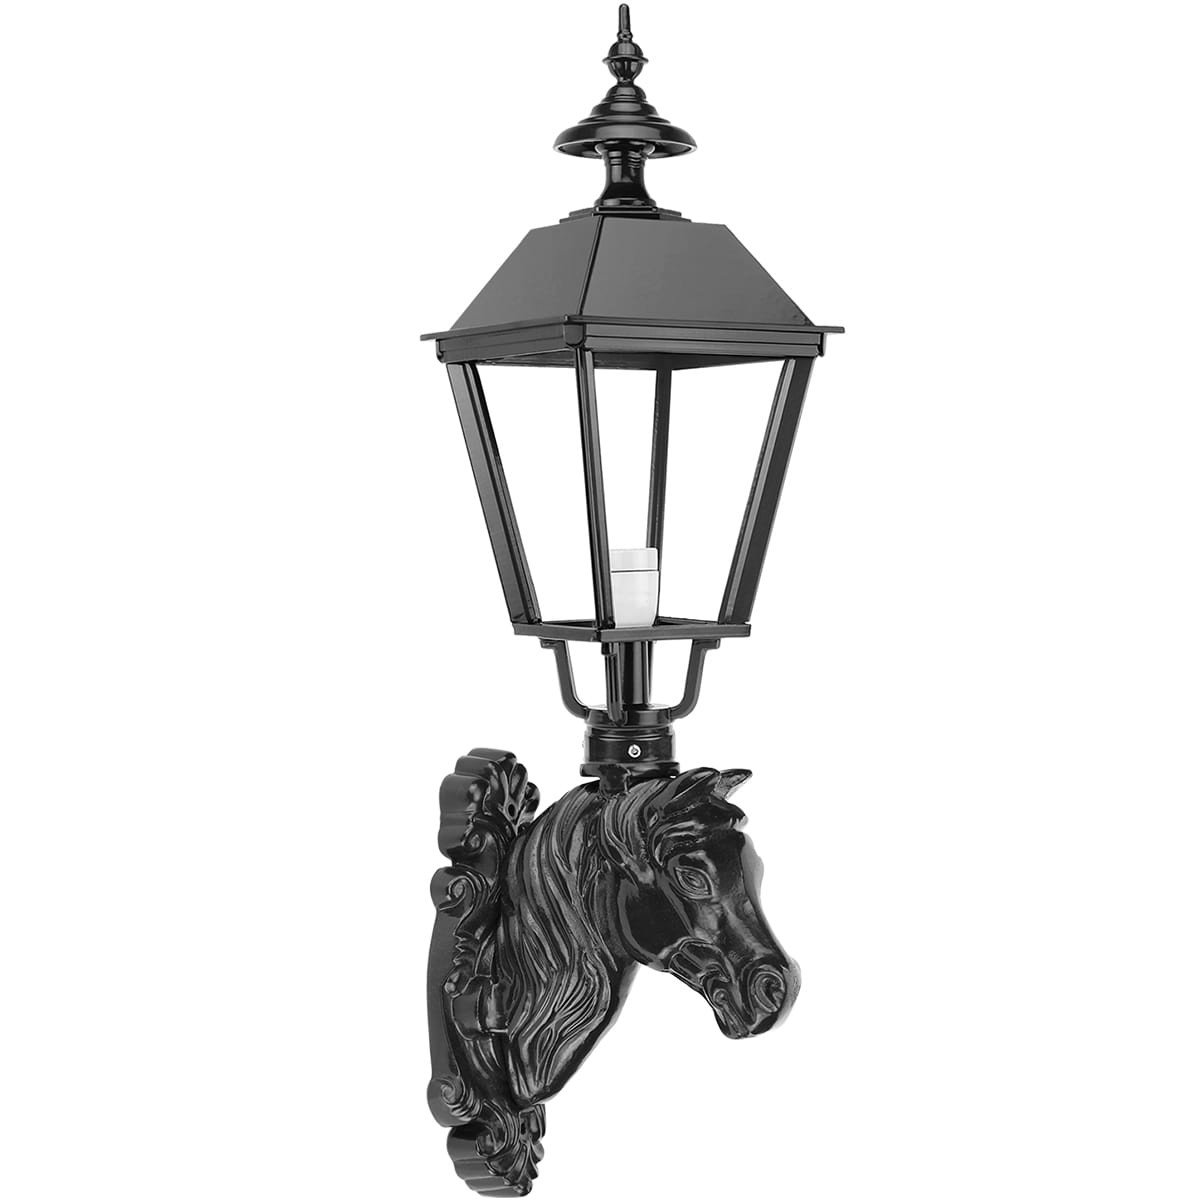 Outdoor Lighting Rural Classic Wall lamp Almkerk horse ornament - 84 cm